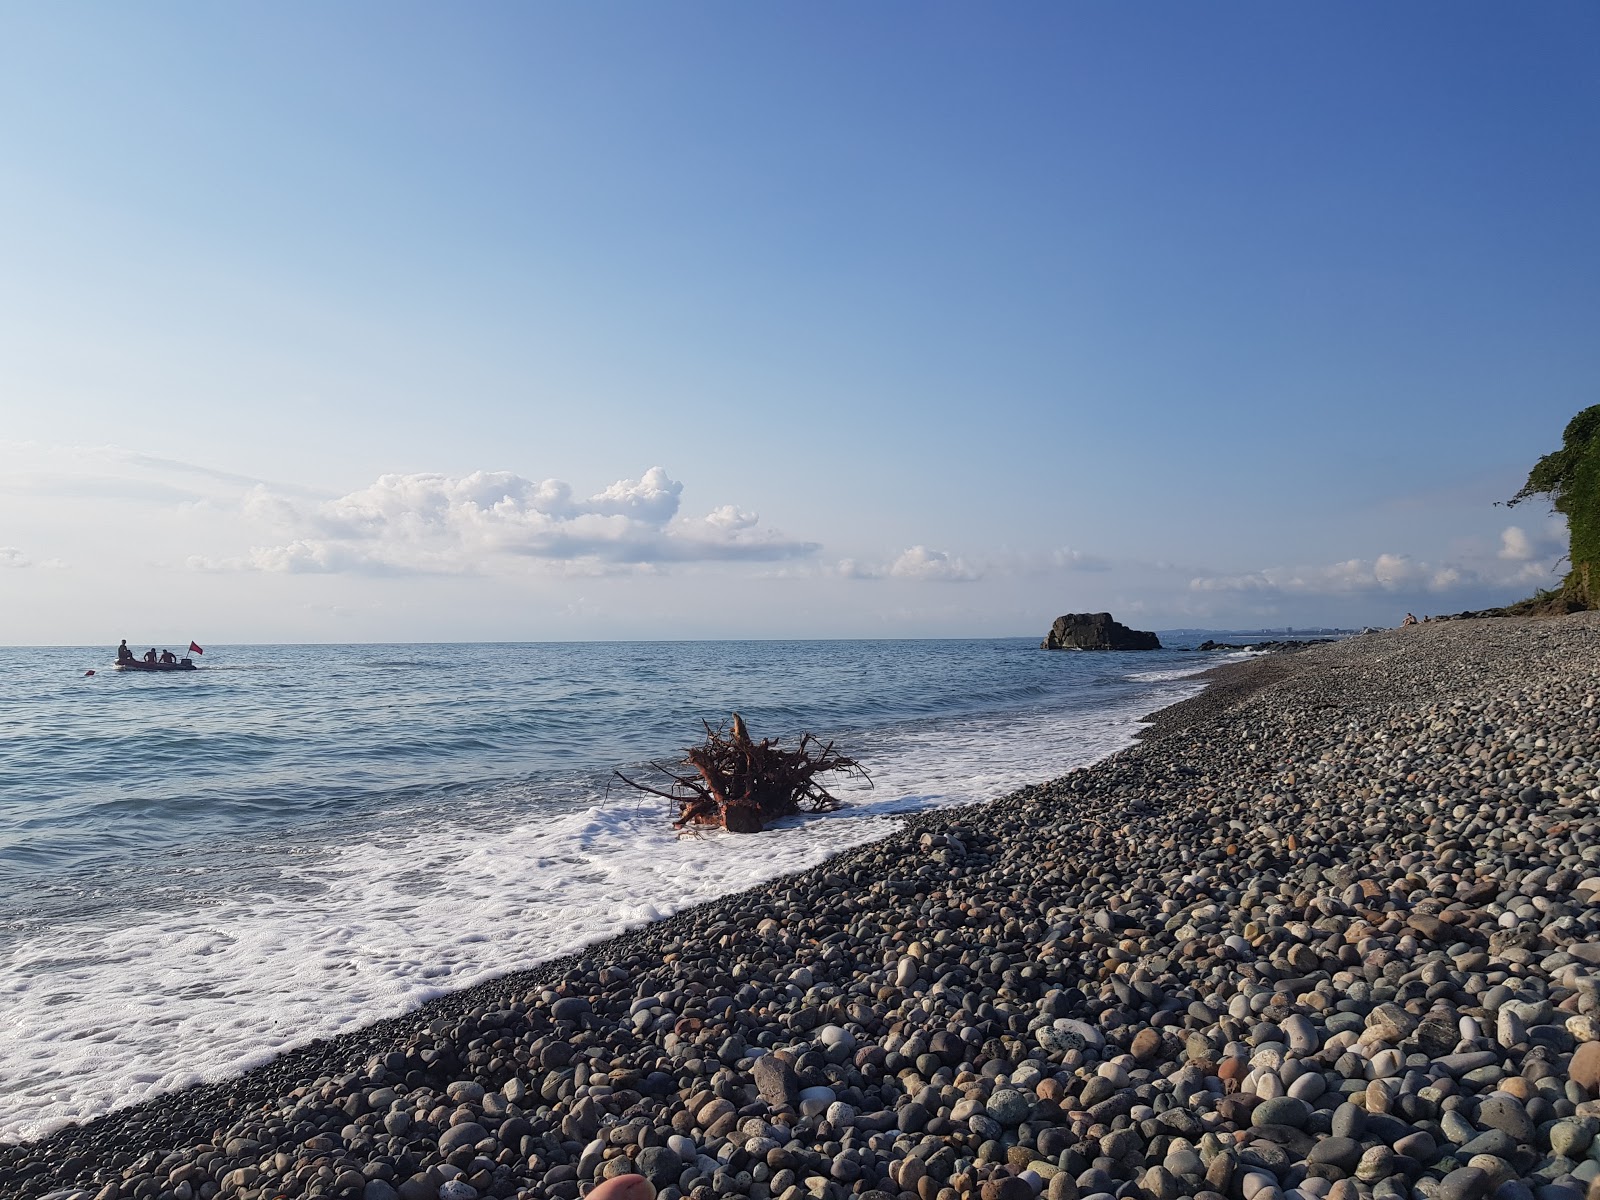 Fotografija Tsikhisdziri beach II nahaja se v naravnem okolju